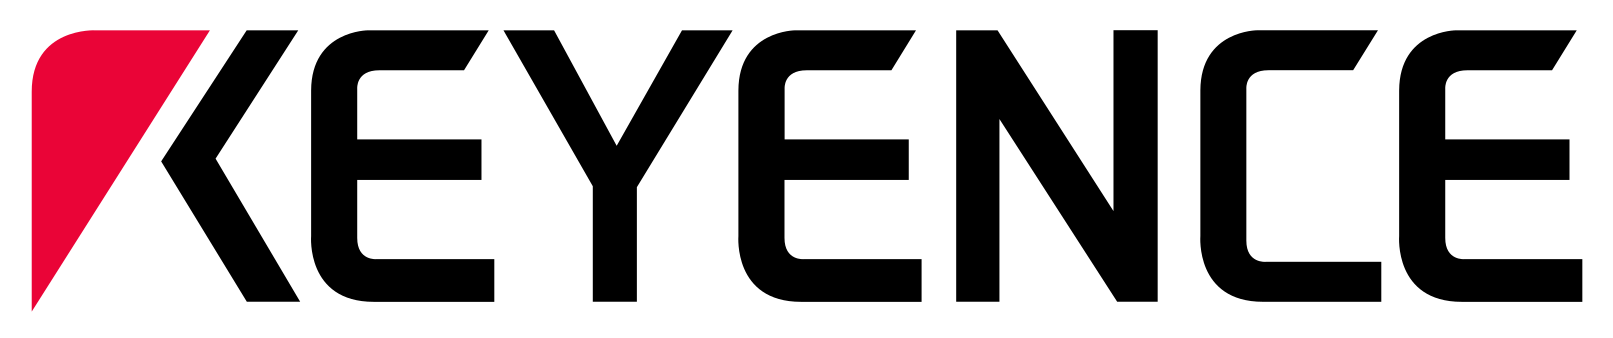 Keyence Logo